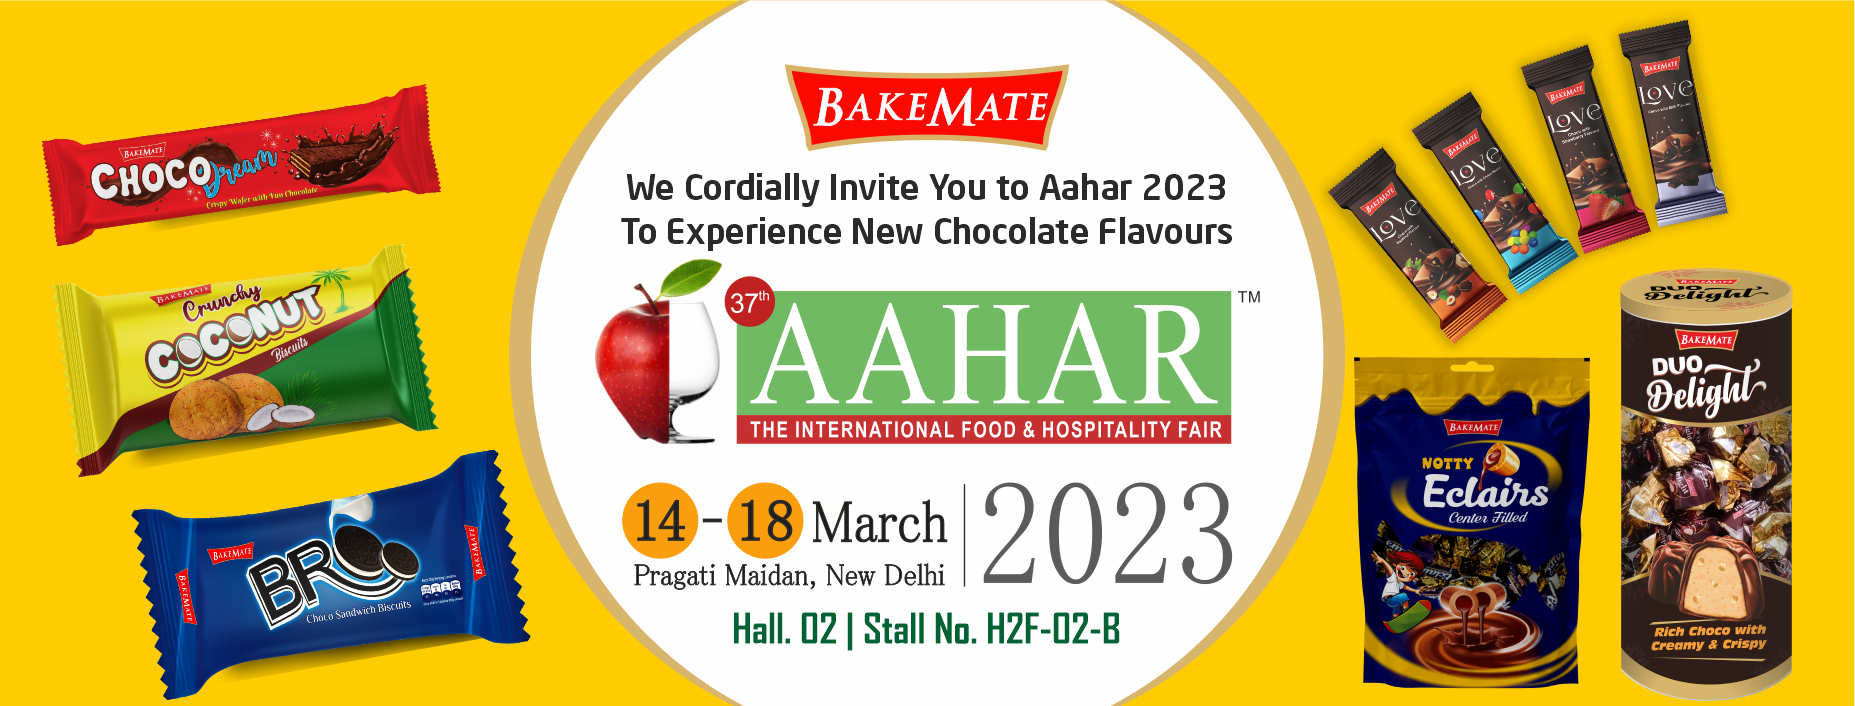 Aahar 2023 - The International Food & Hospitality Fair 14th to 18th March - Pragati Maidan, New Delhi Timings 10:00AM to 06:00PM 37th International Food and Hospitality